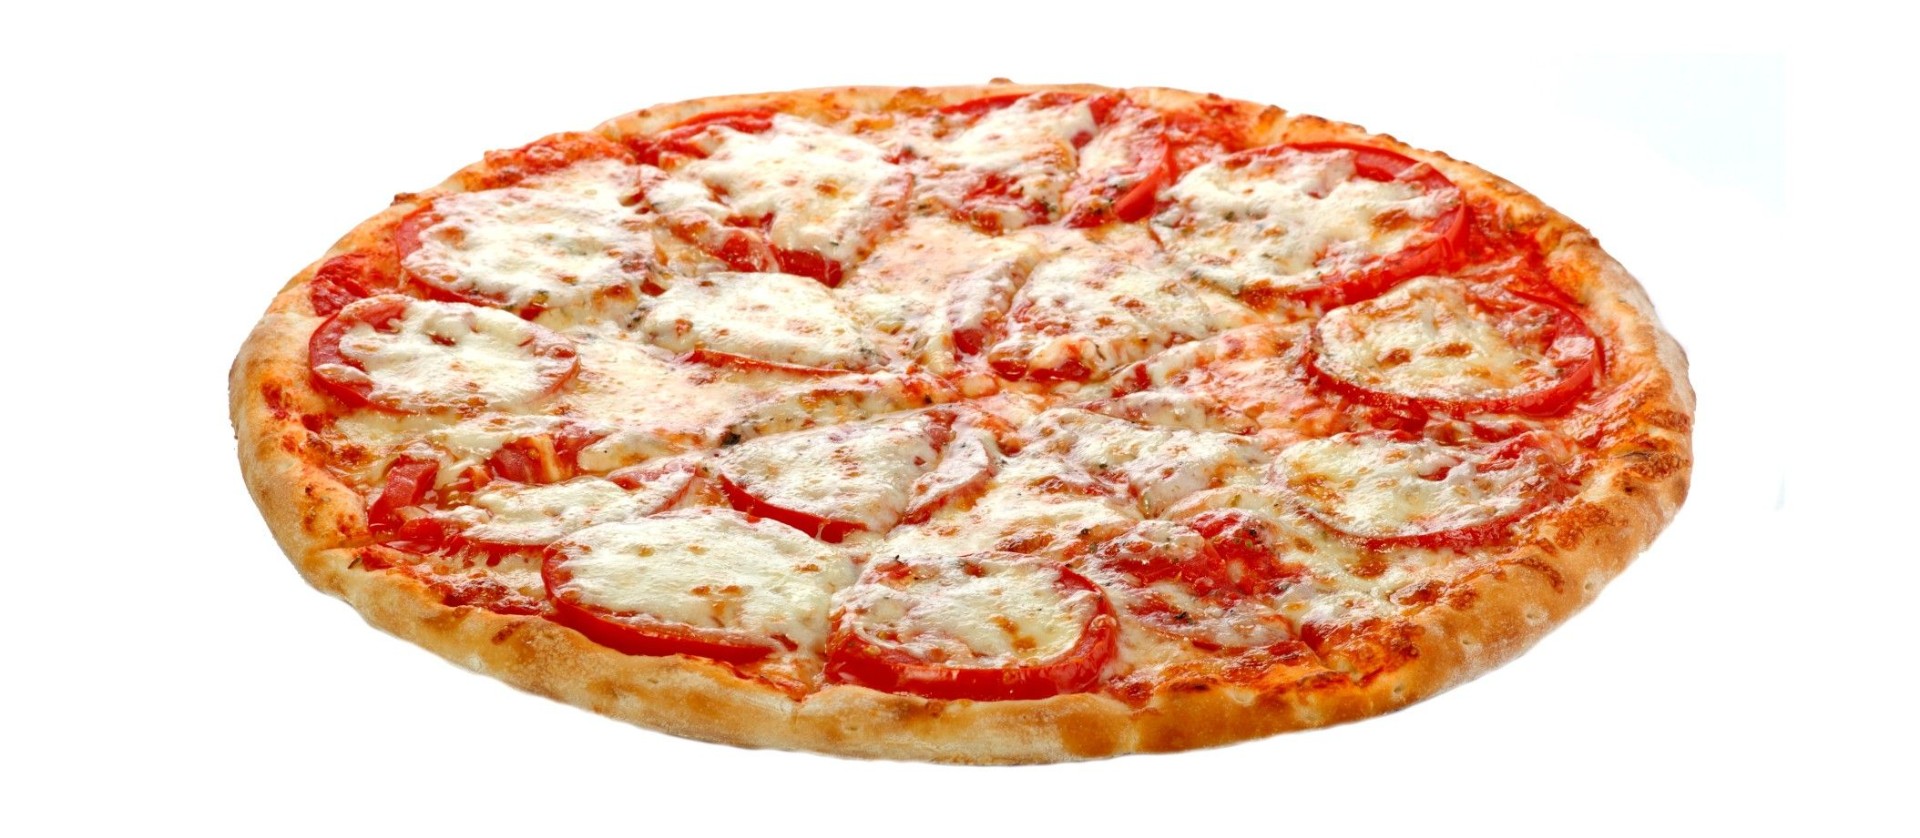 состав пиццы маргарита и пепперони фото 52